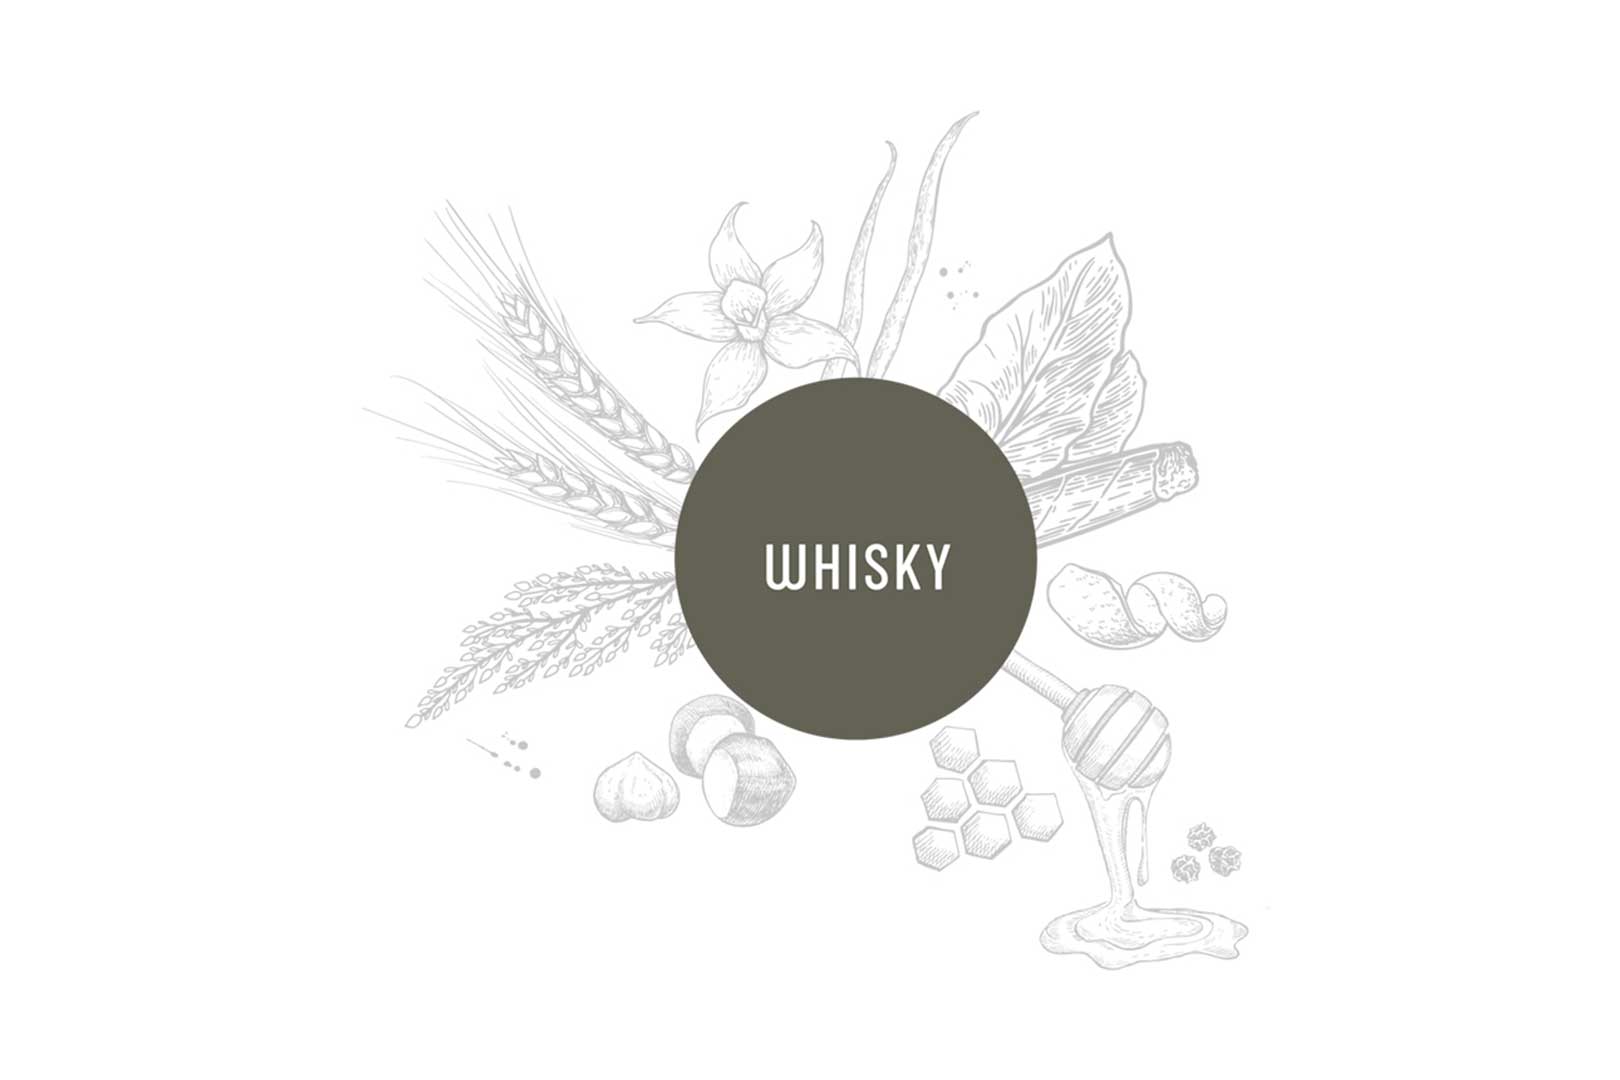 whisky tasting birkenhof brennerei gmbh nistertal WEB AUF 3 2 1620x bfffrpuaysgb